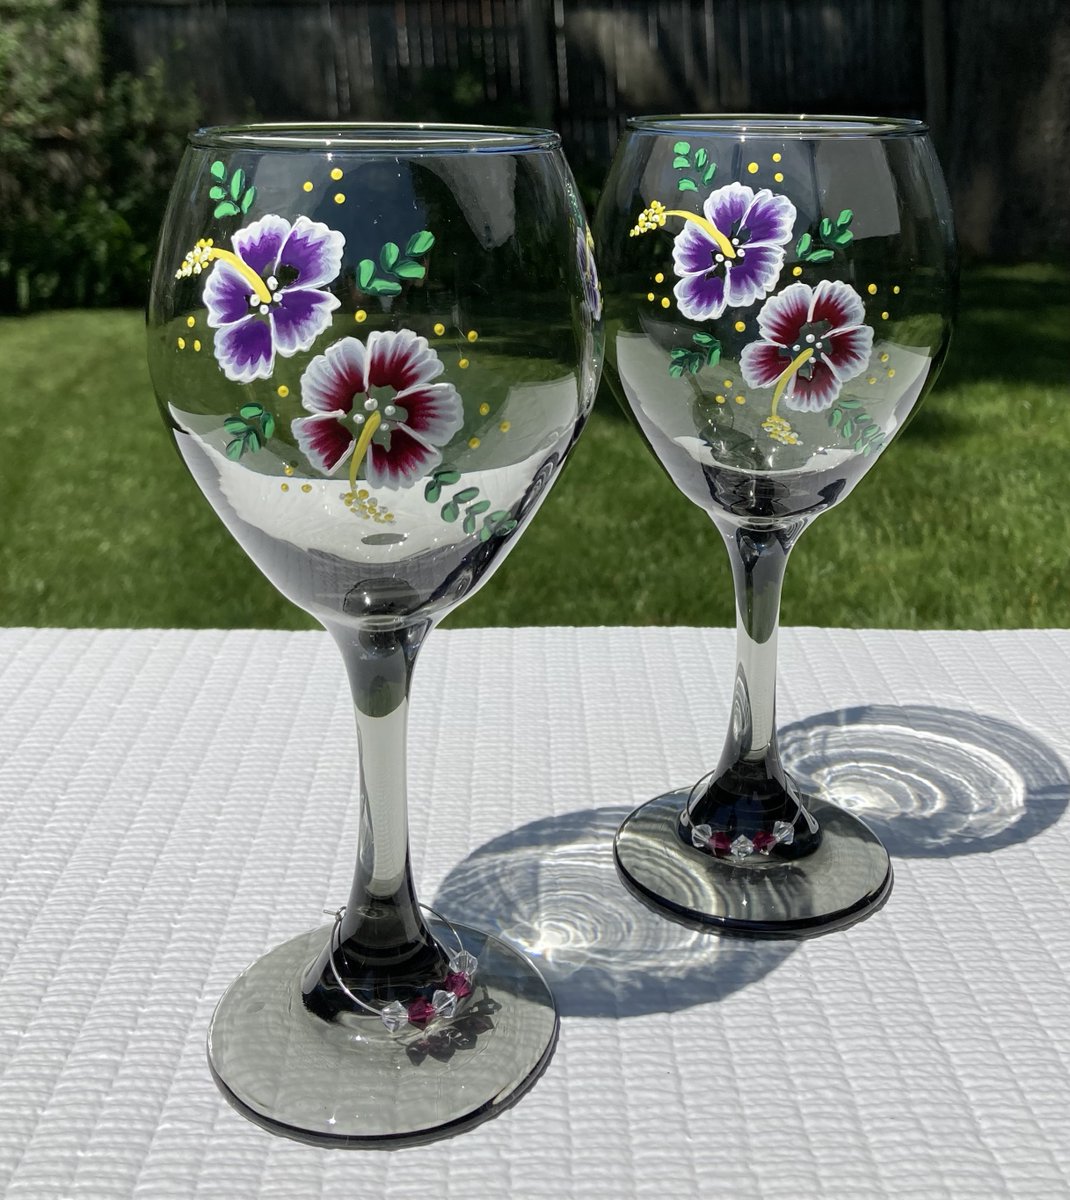 Check out these glasses etsy.com/listing/122463… #wineglasses #summerglasses #giftsforher #SMILEtt23 #CraftBizParty #etsy #etsyshop